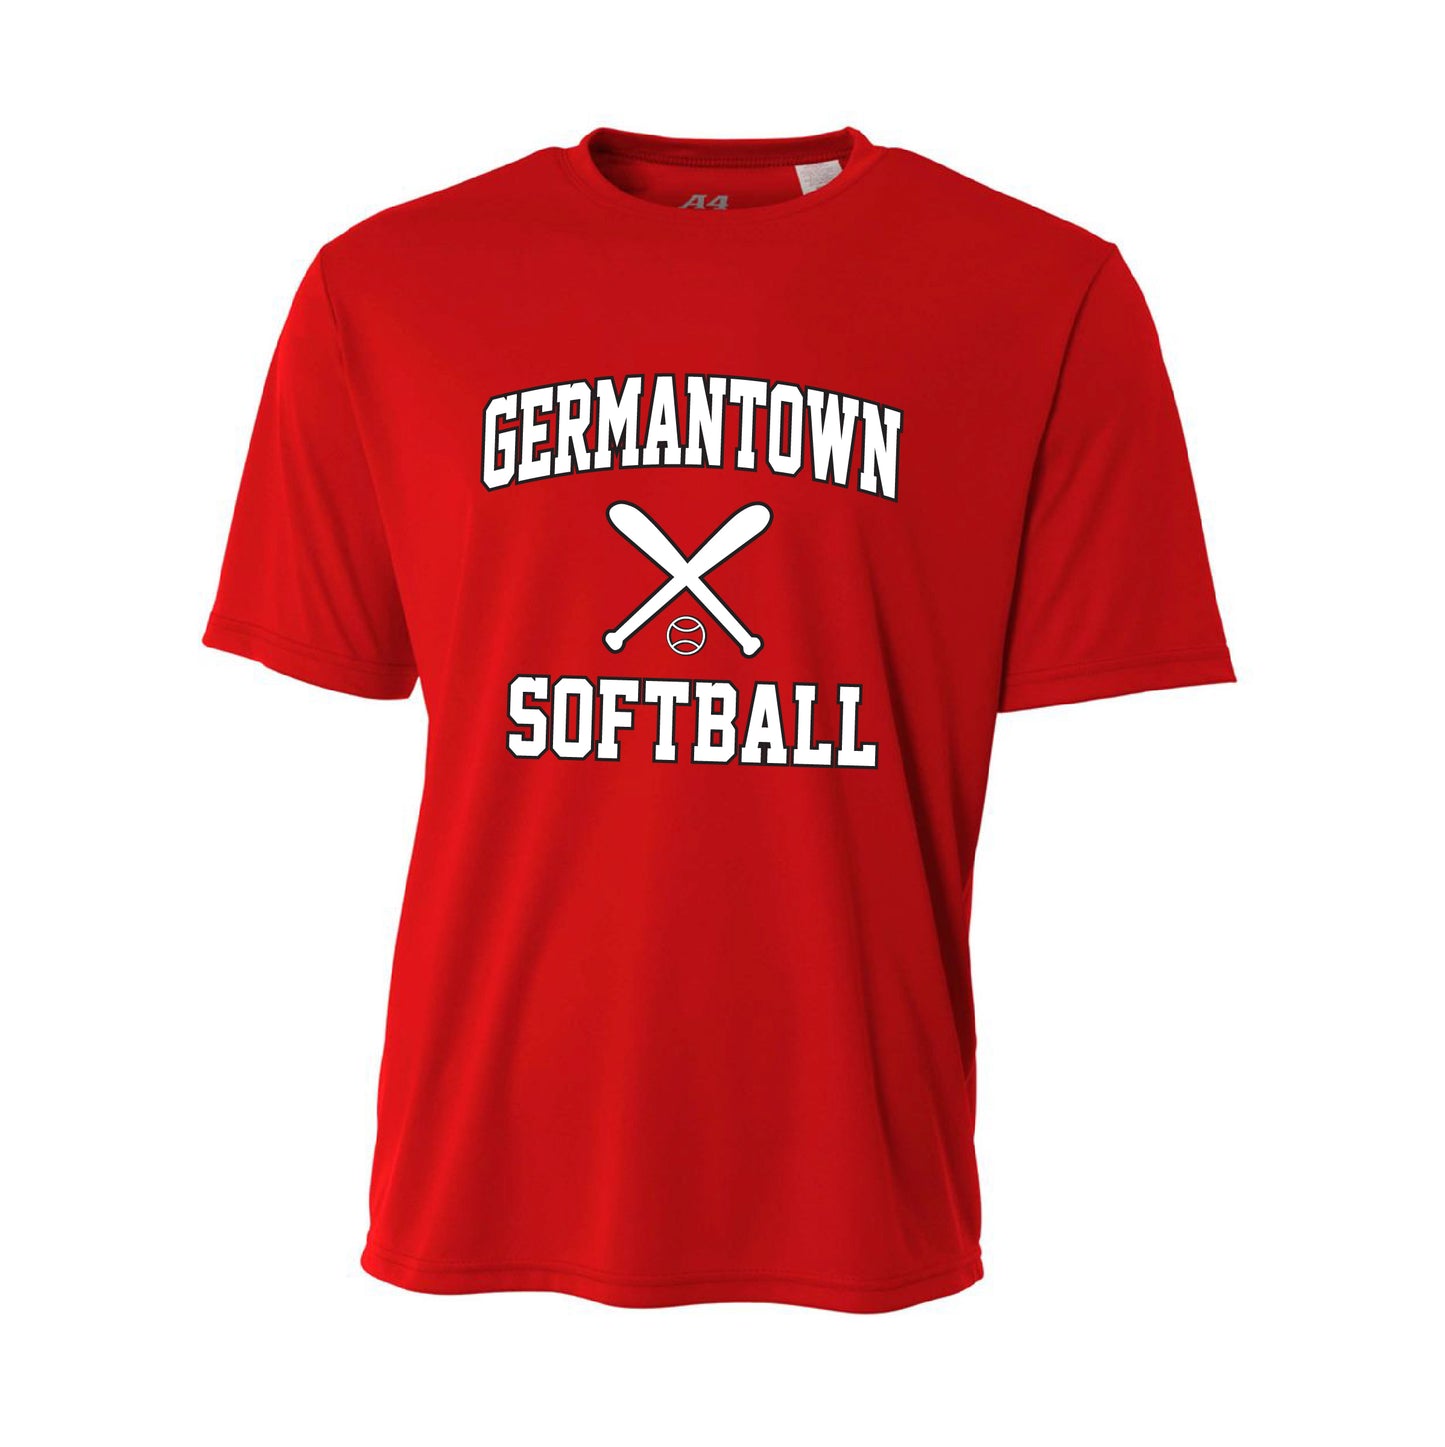 Germantown Softball - Red Jersey - 12879 16U